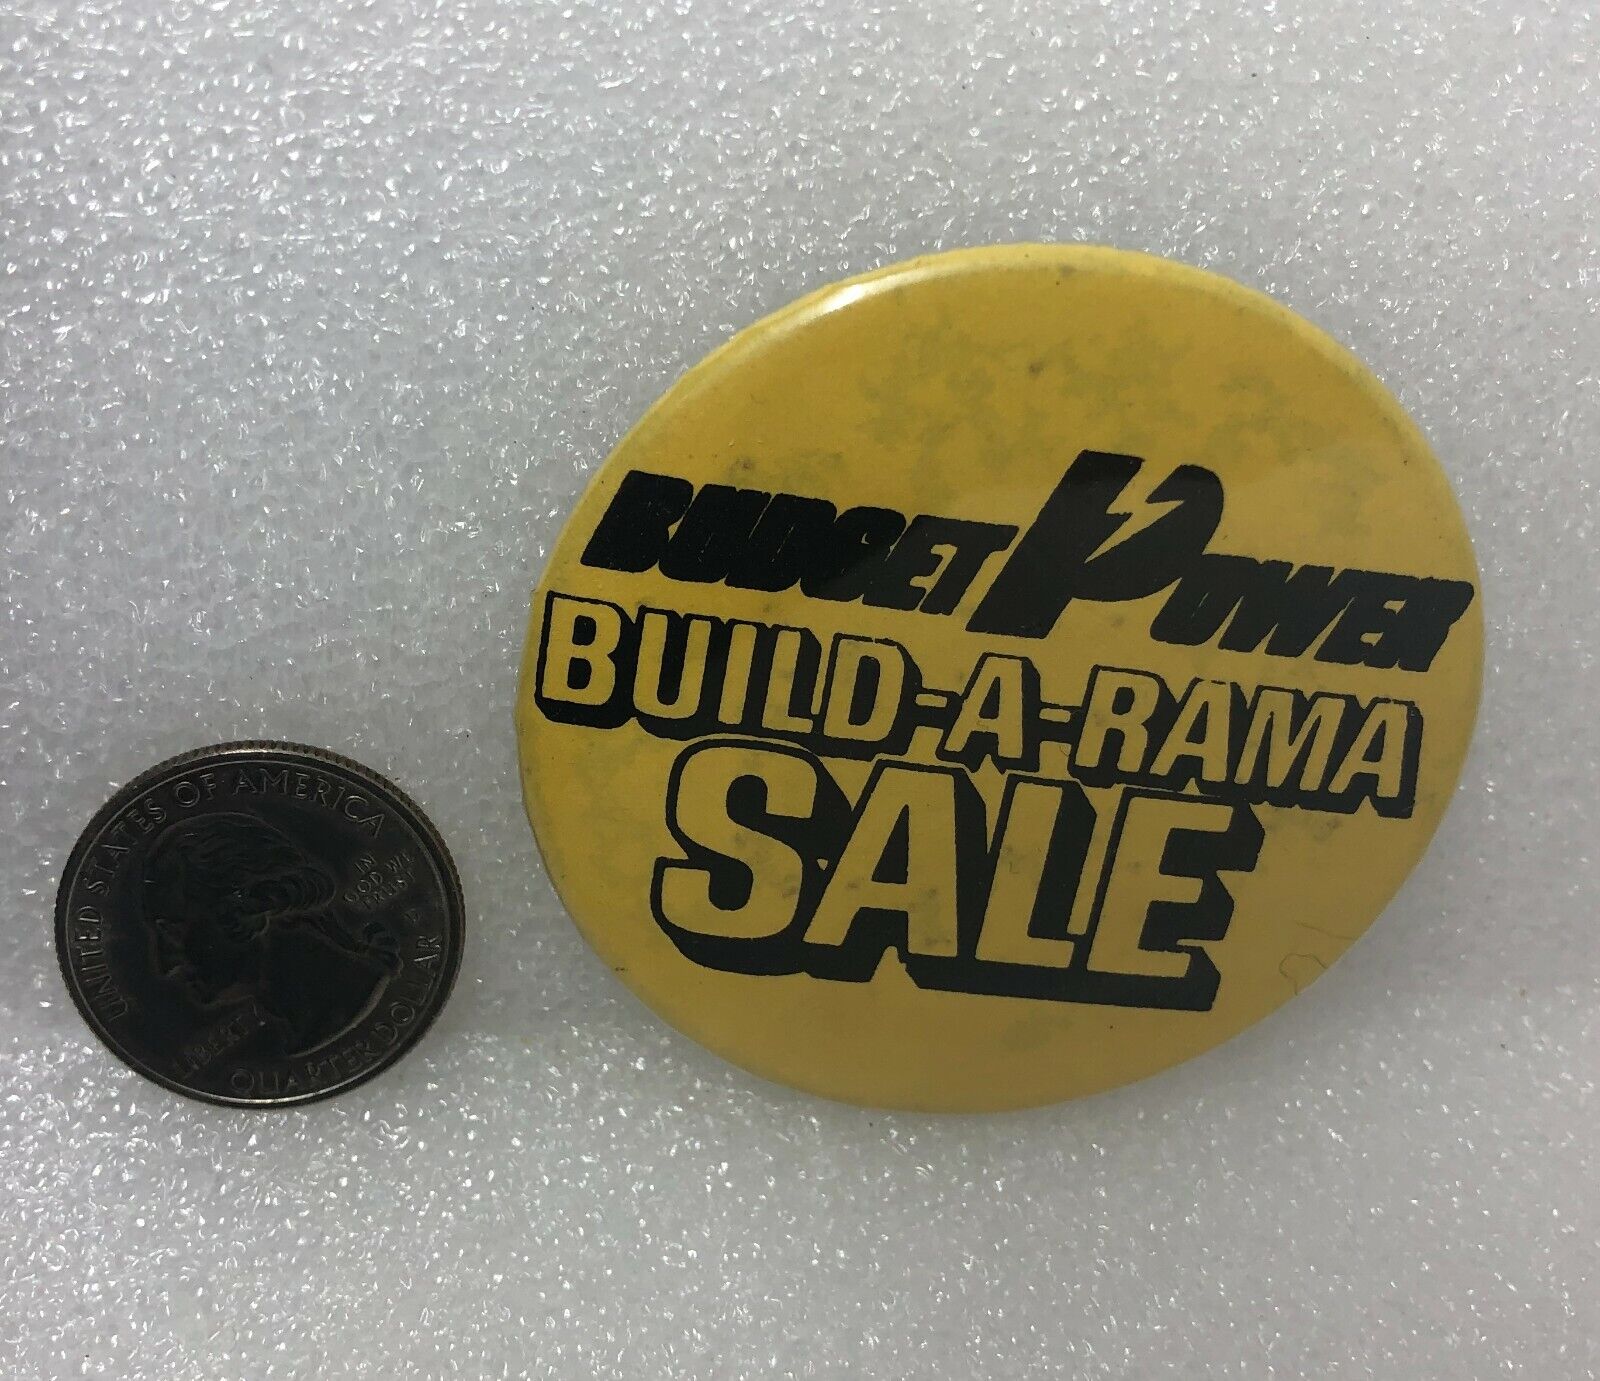 Budget Power Build-A-Rama Sale Advertising Pin